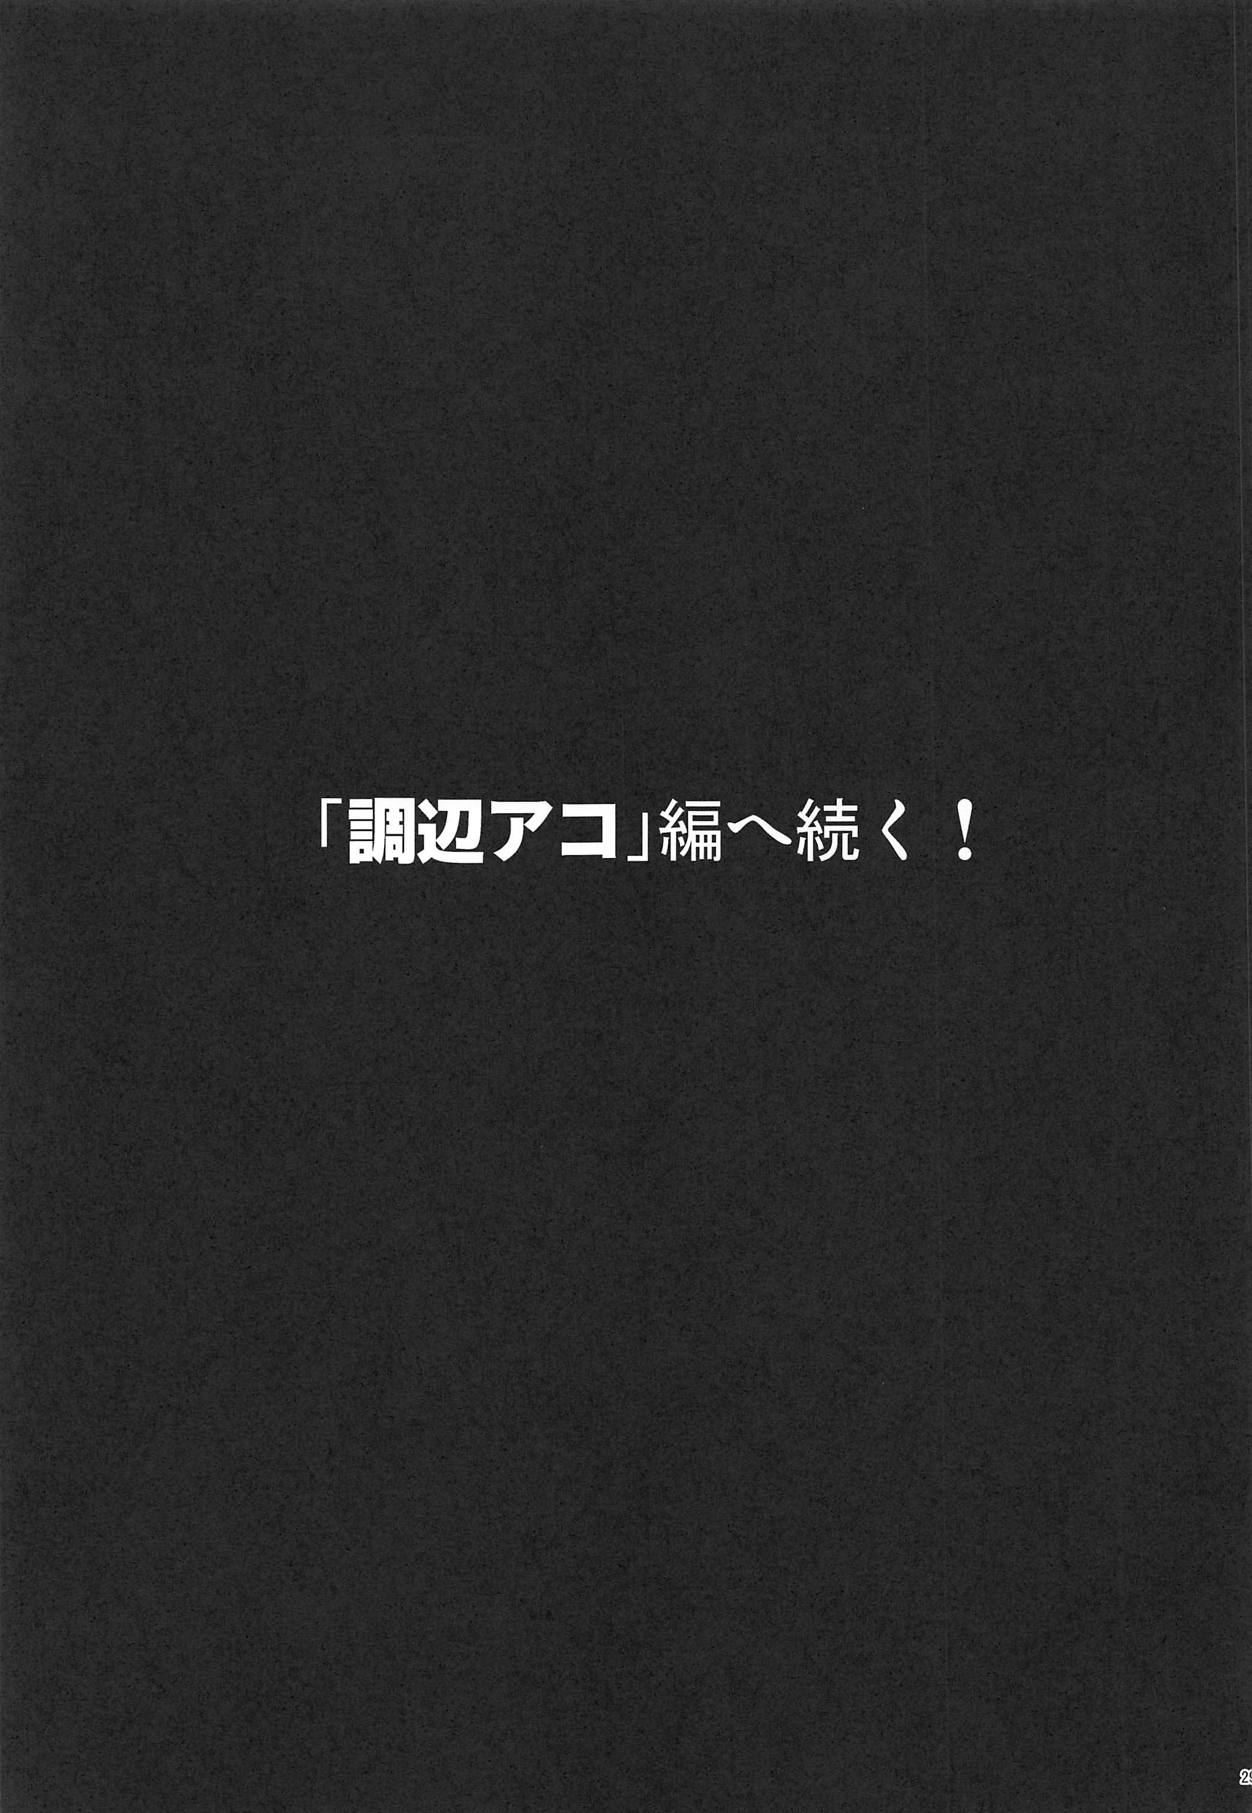 (C95) [Custardragon (ろろちゃんねる)] 円亜久里とセーラー服♥ (ドキドキ!プリキュア)